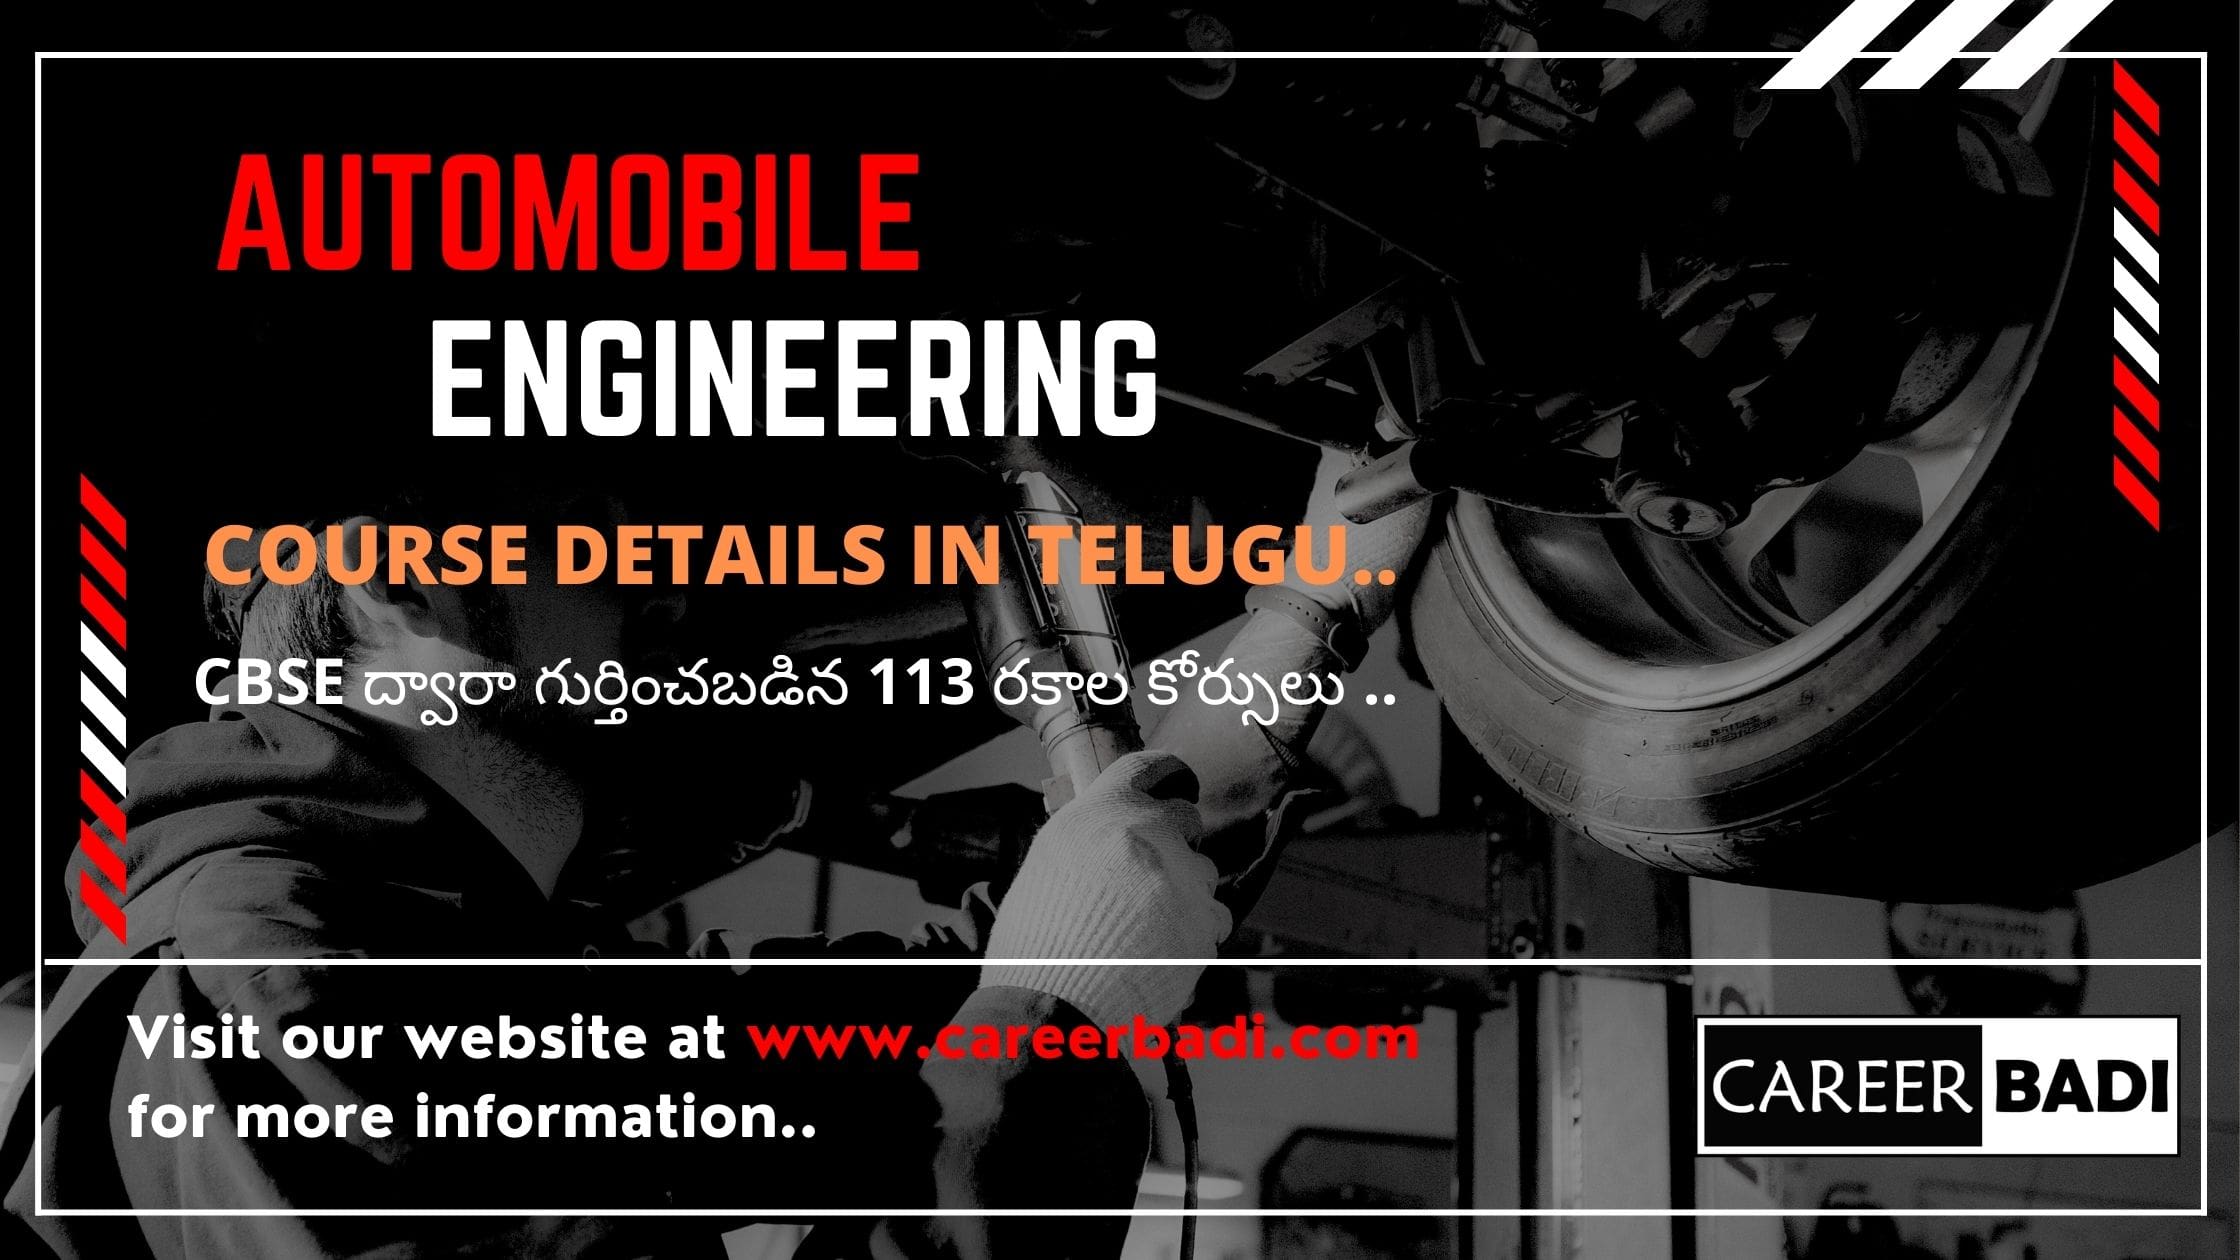 Automobile Engineering Course Details in Telugu